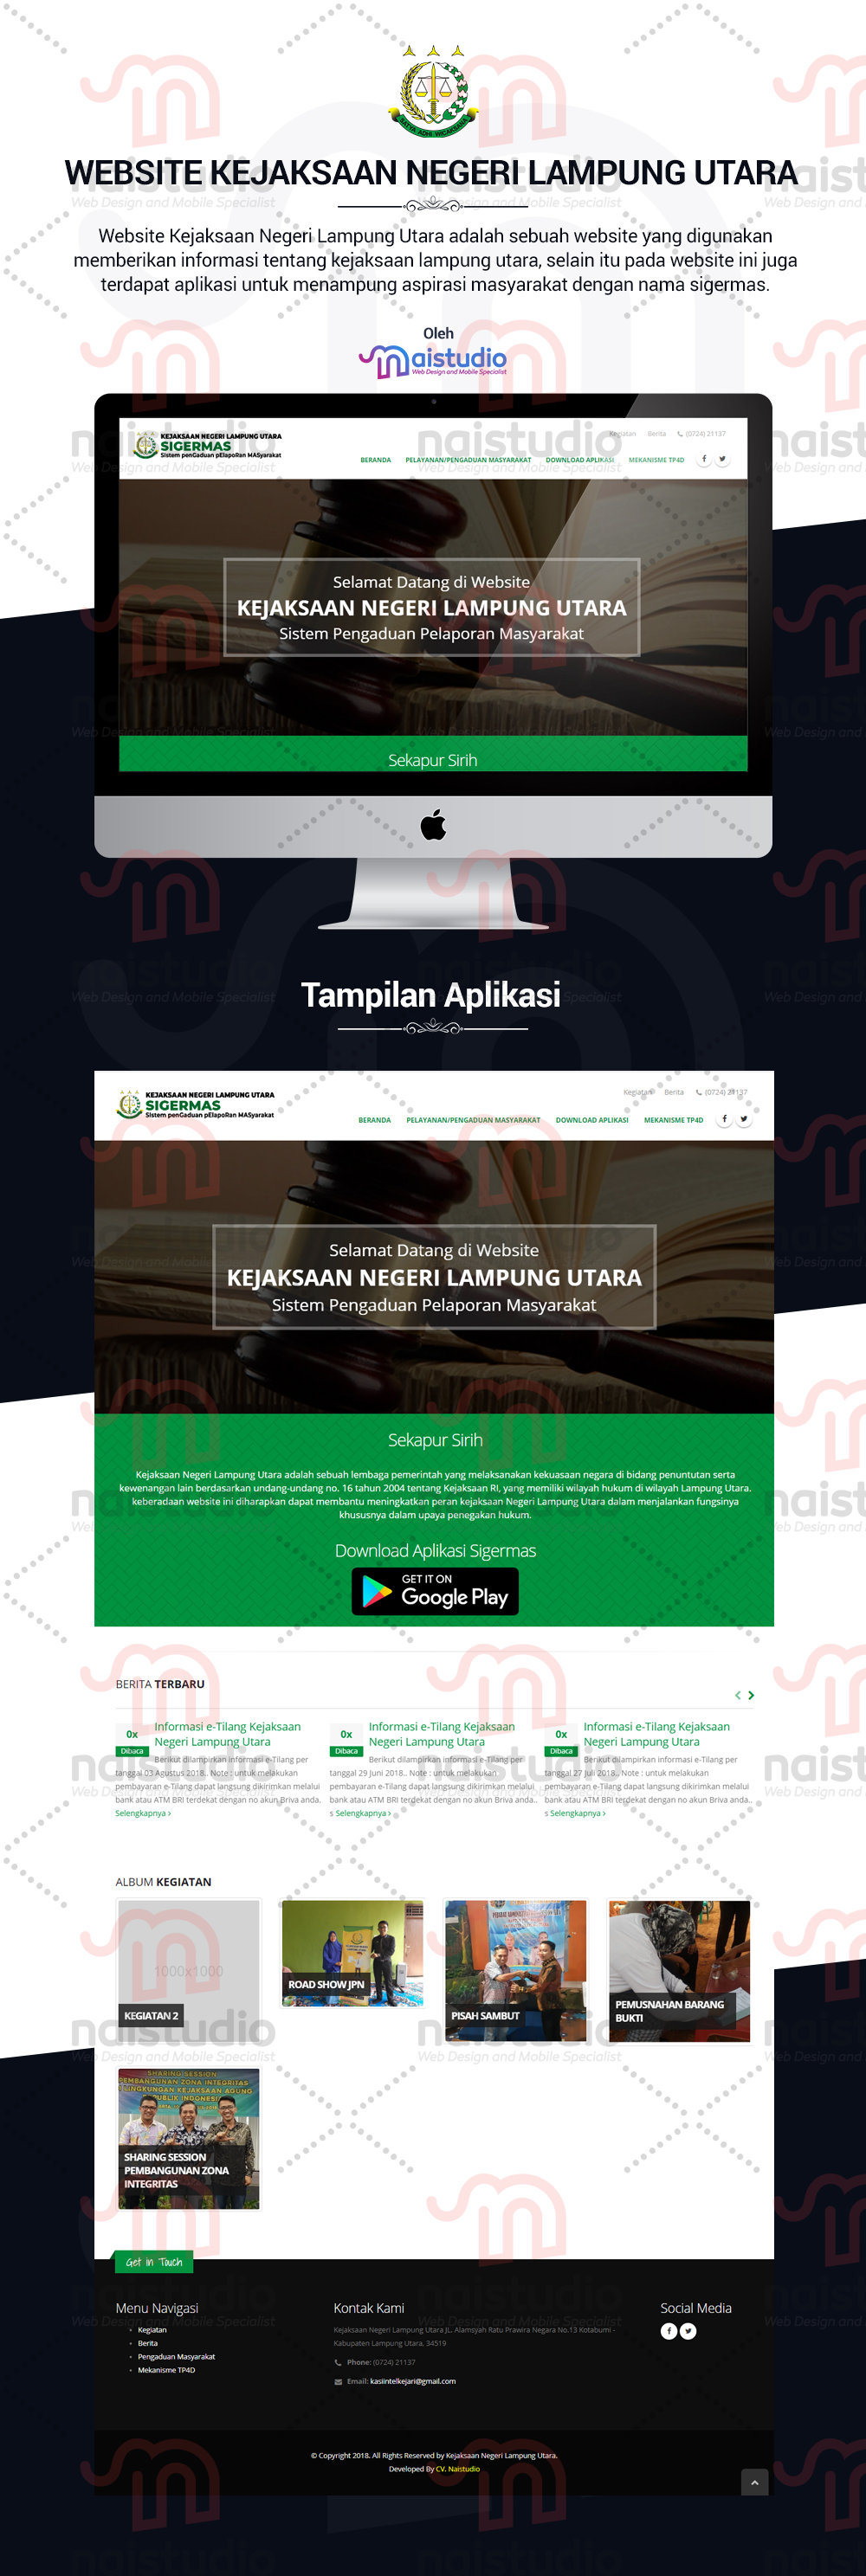 Website Kejaksaan Negeri Lampung Utara